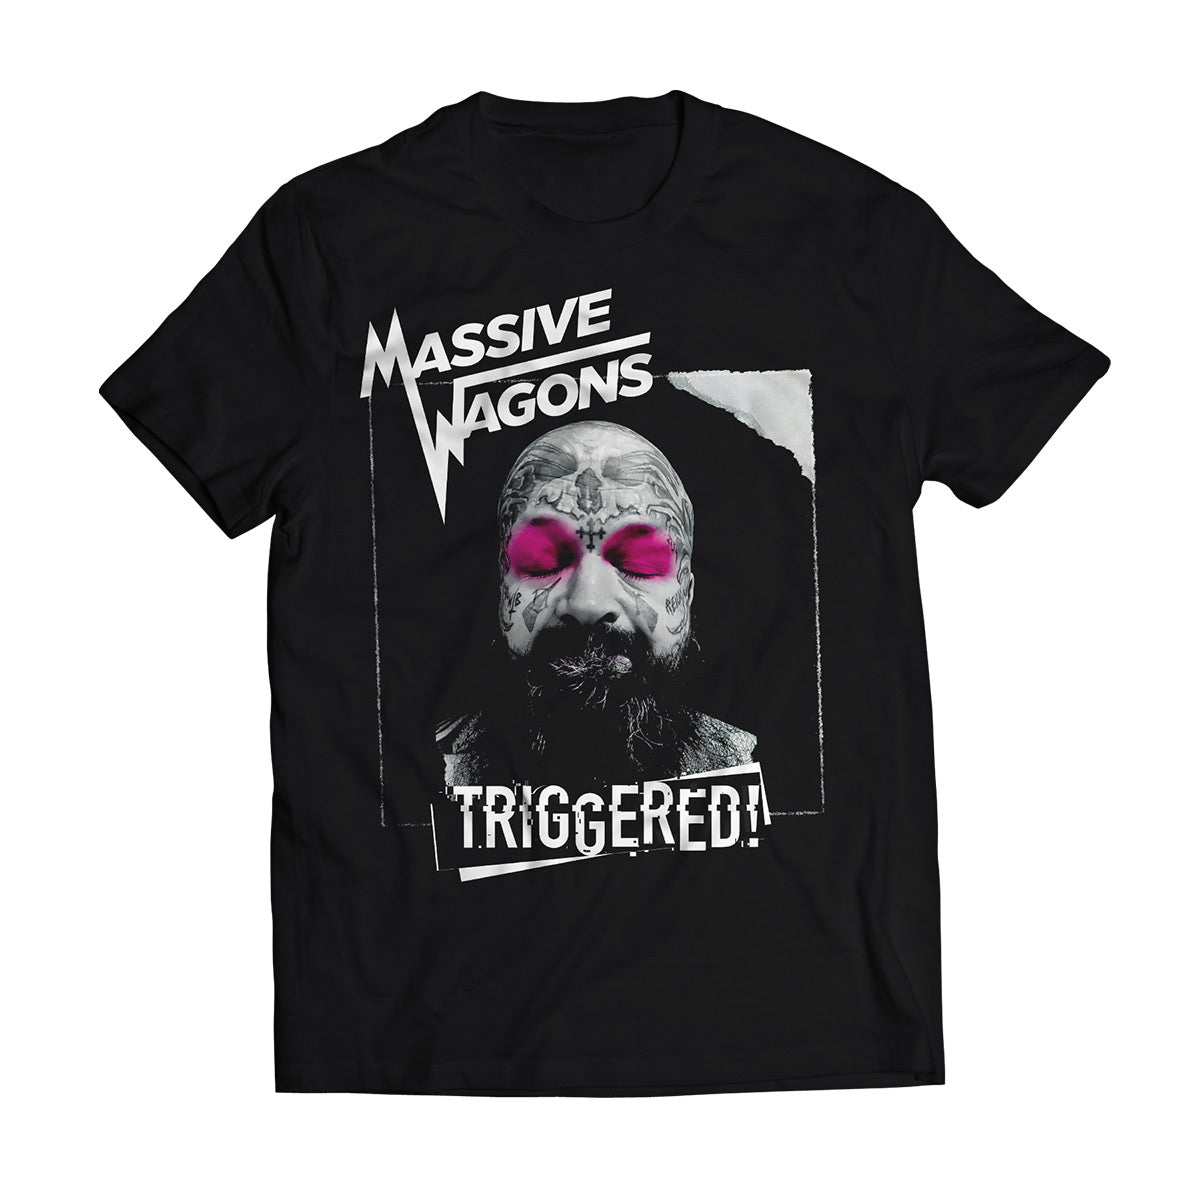 Massive Wagons "TRIGGERED!" T shirt